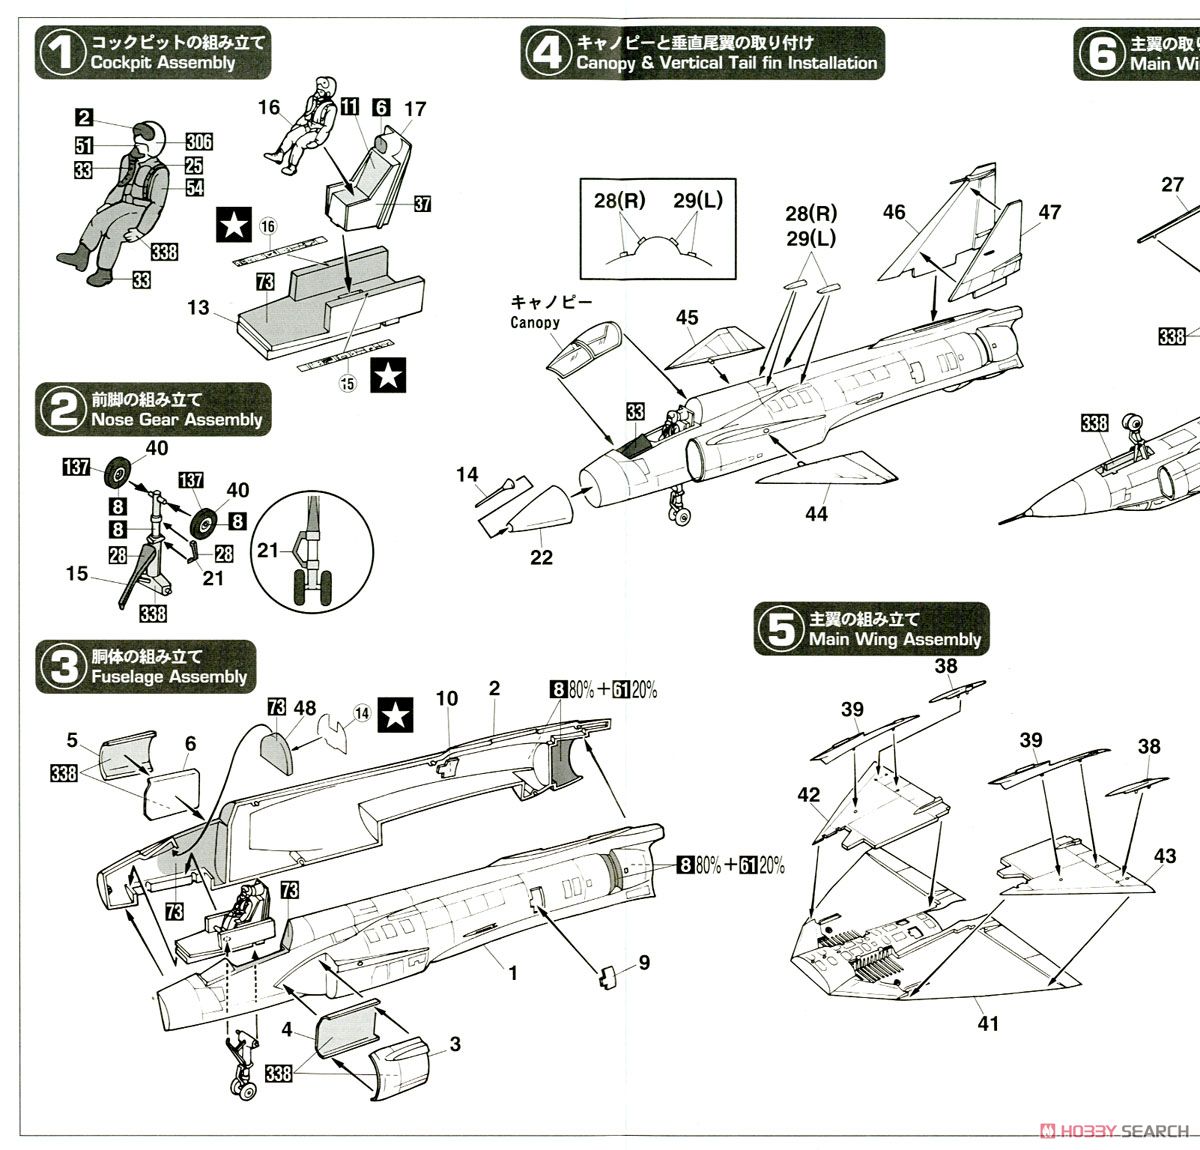 AJ-37 Viggen `Natural Metal 2016` (Plastic model) Assembly guide1